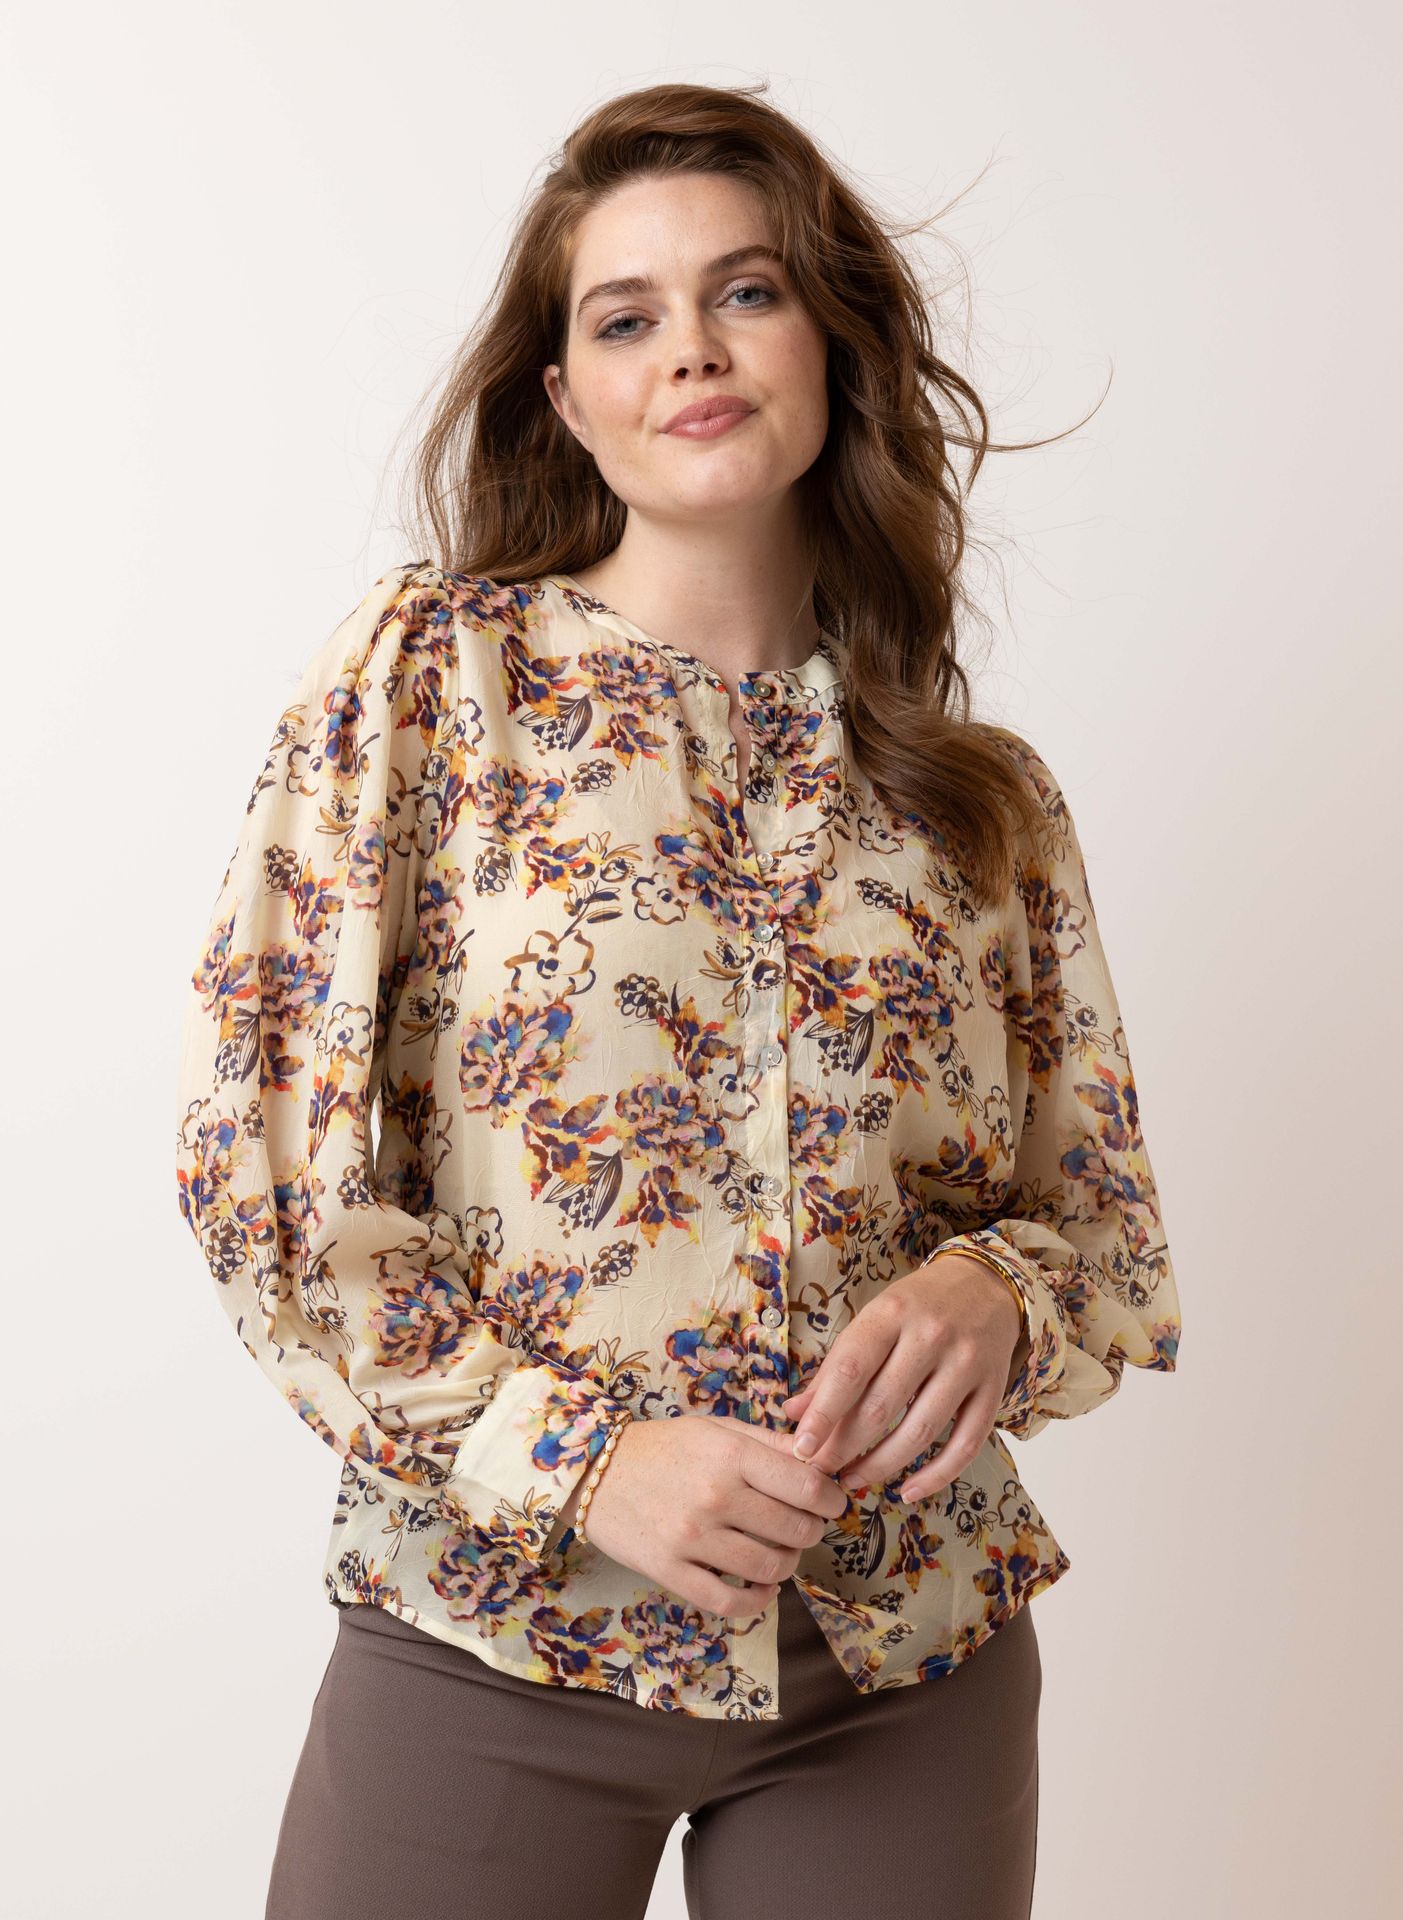 Norah Meerkleurige blouse vanilla multicolor 214857-108